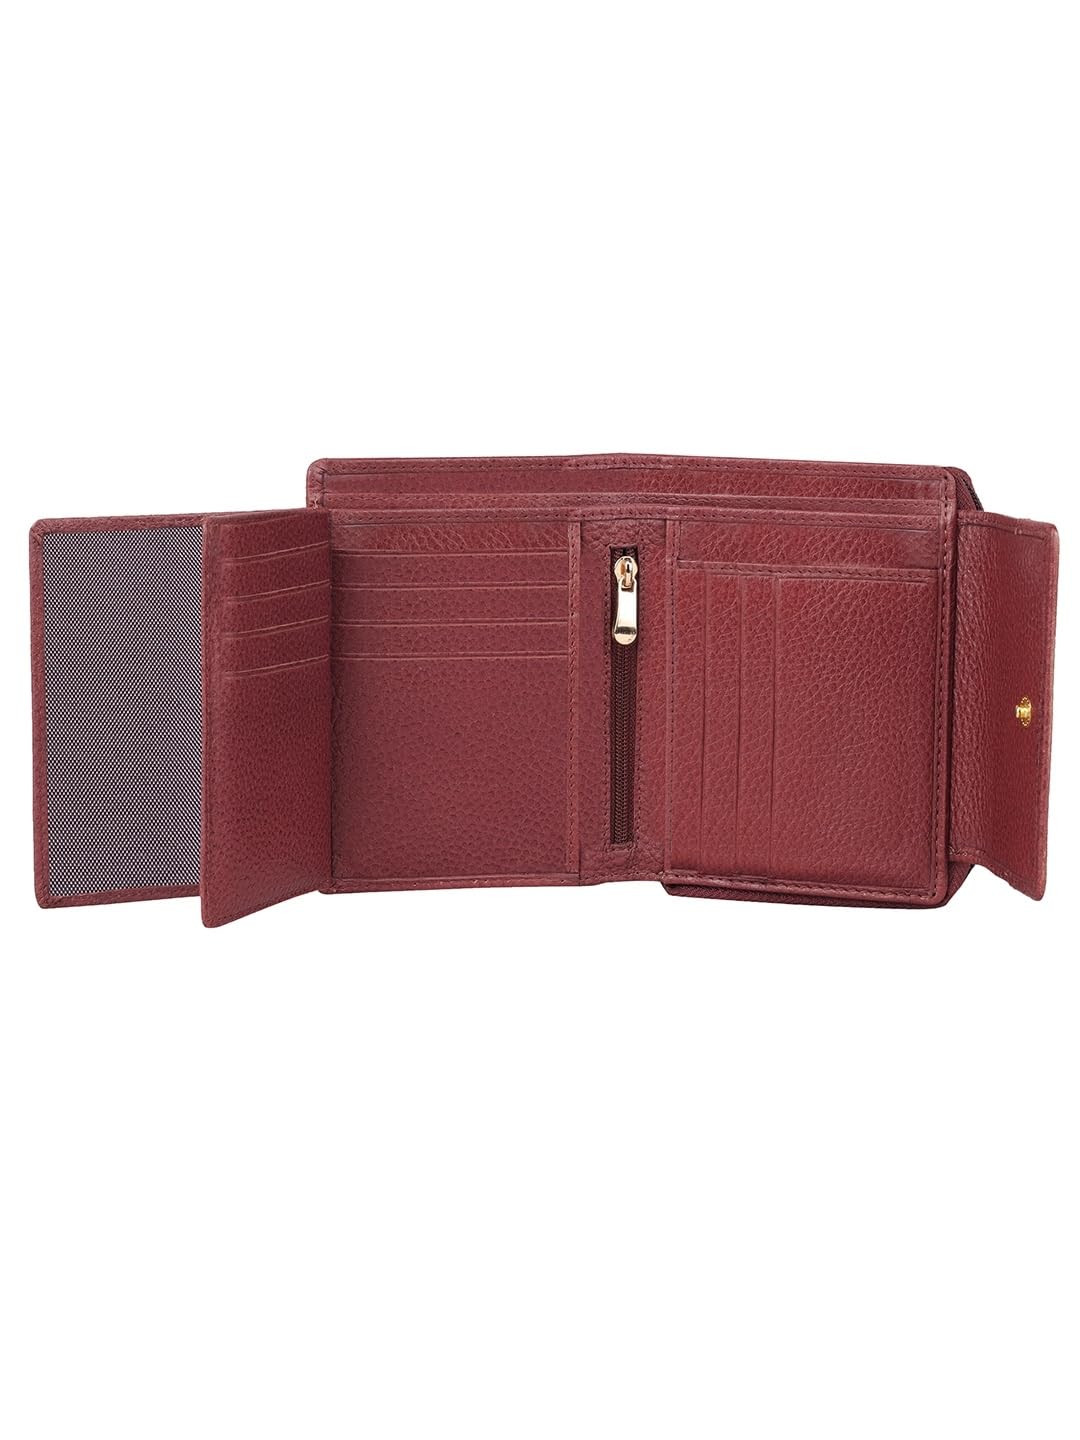 WildHorn Leather Wallet Giftset for Men & Women